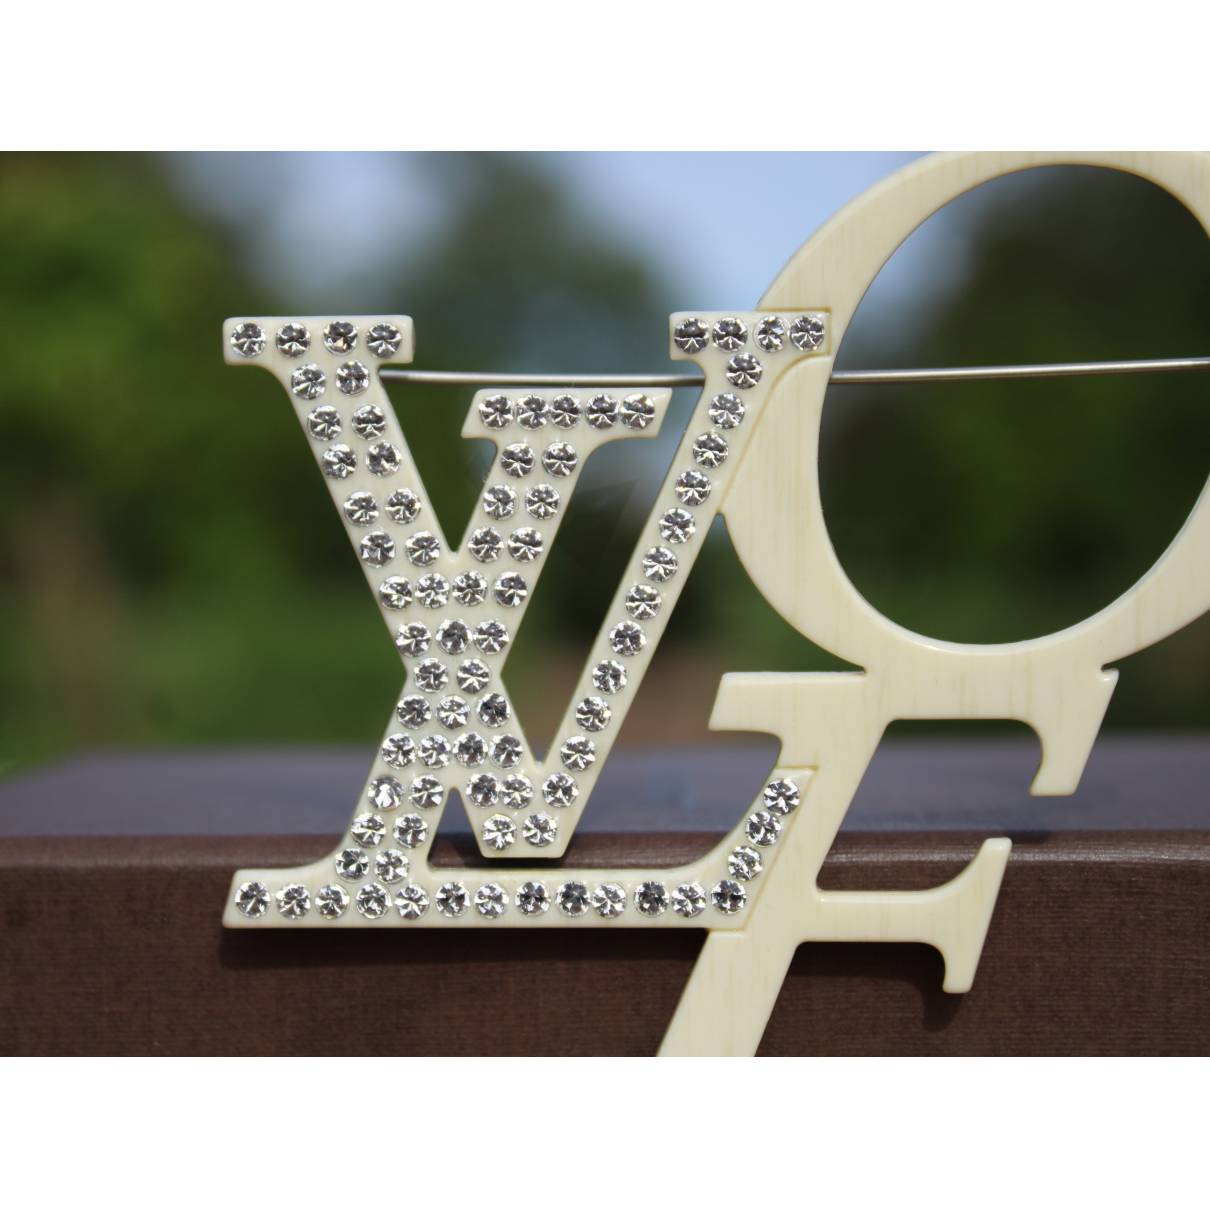 Louis Vuitton Authenticated Pins